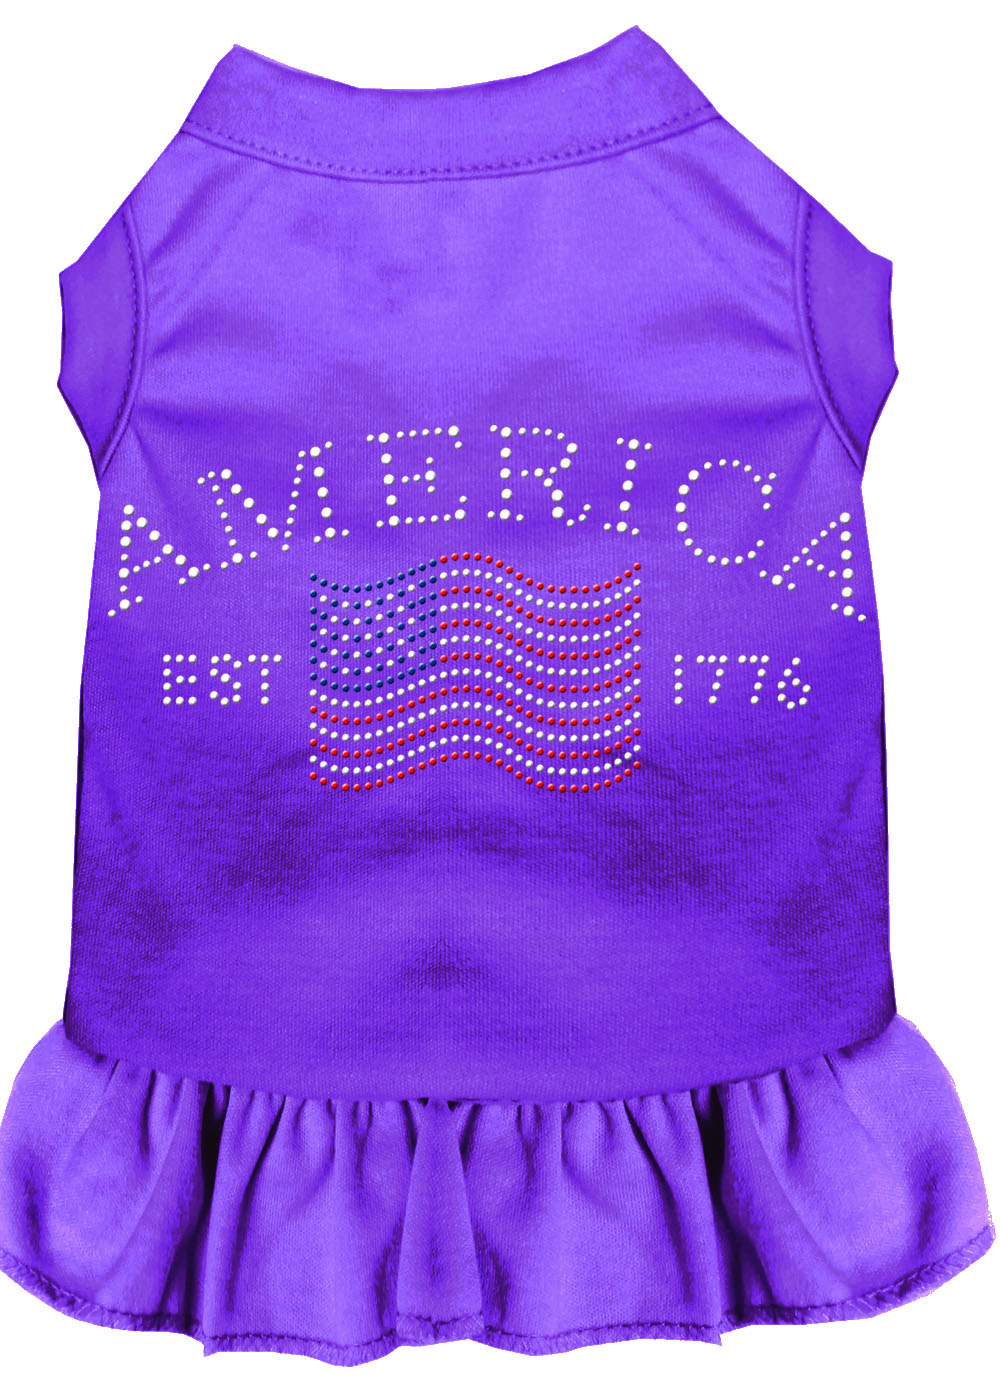 Classic America Rhinestone Dress Purple Med